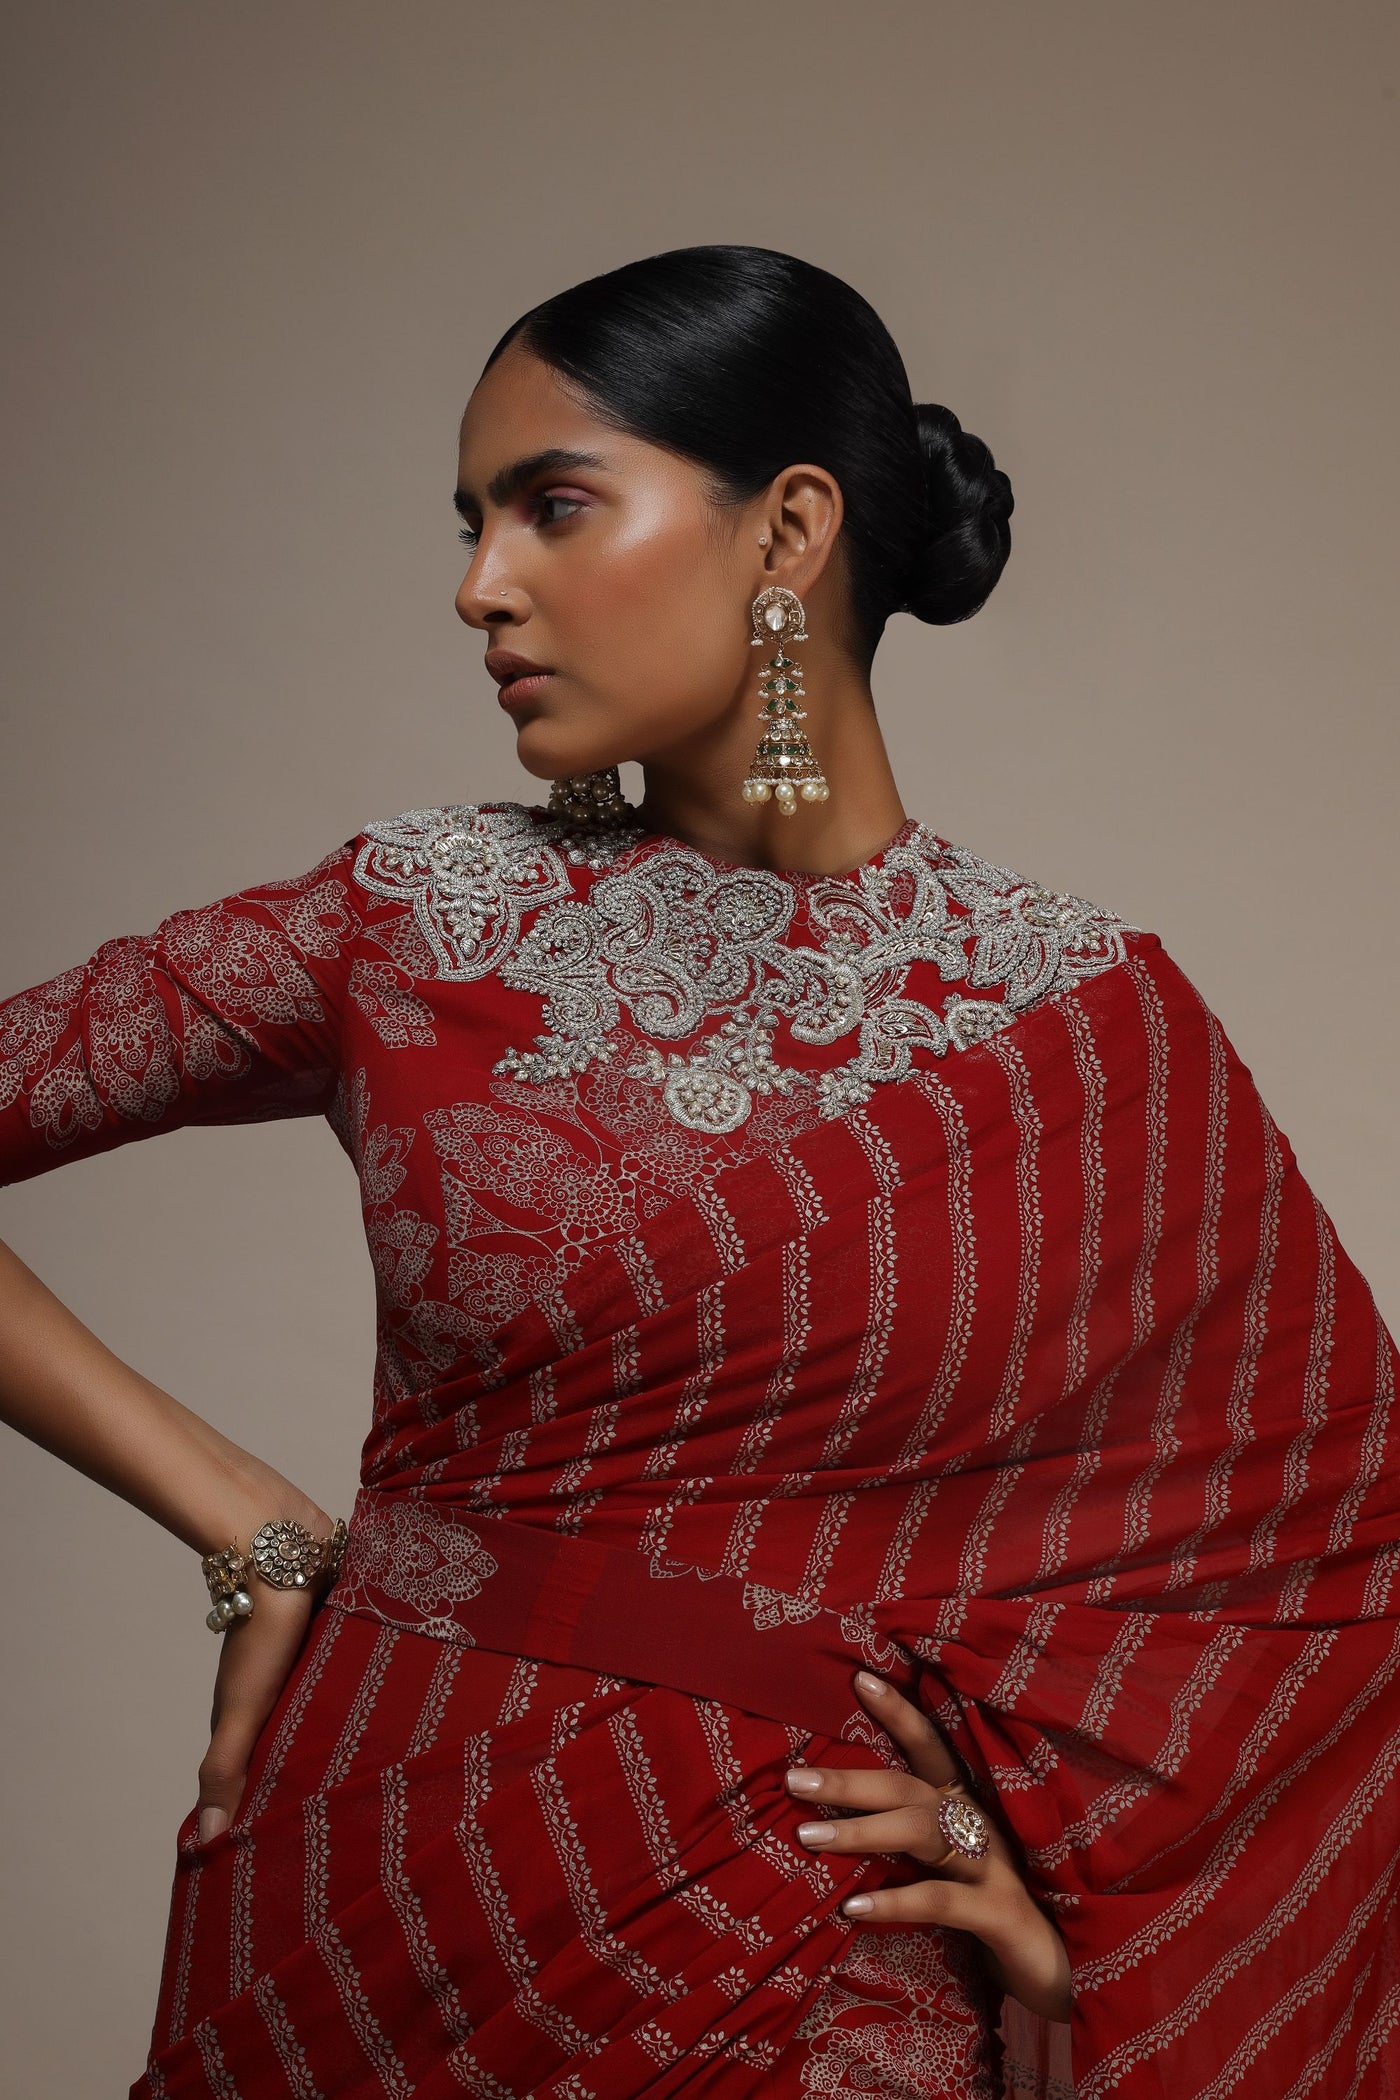 Red Tara Nurekha Pre-Stitched Saree